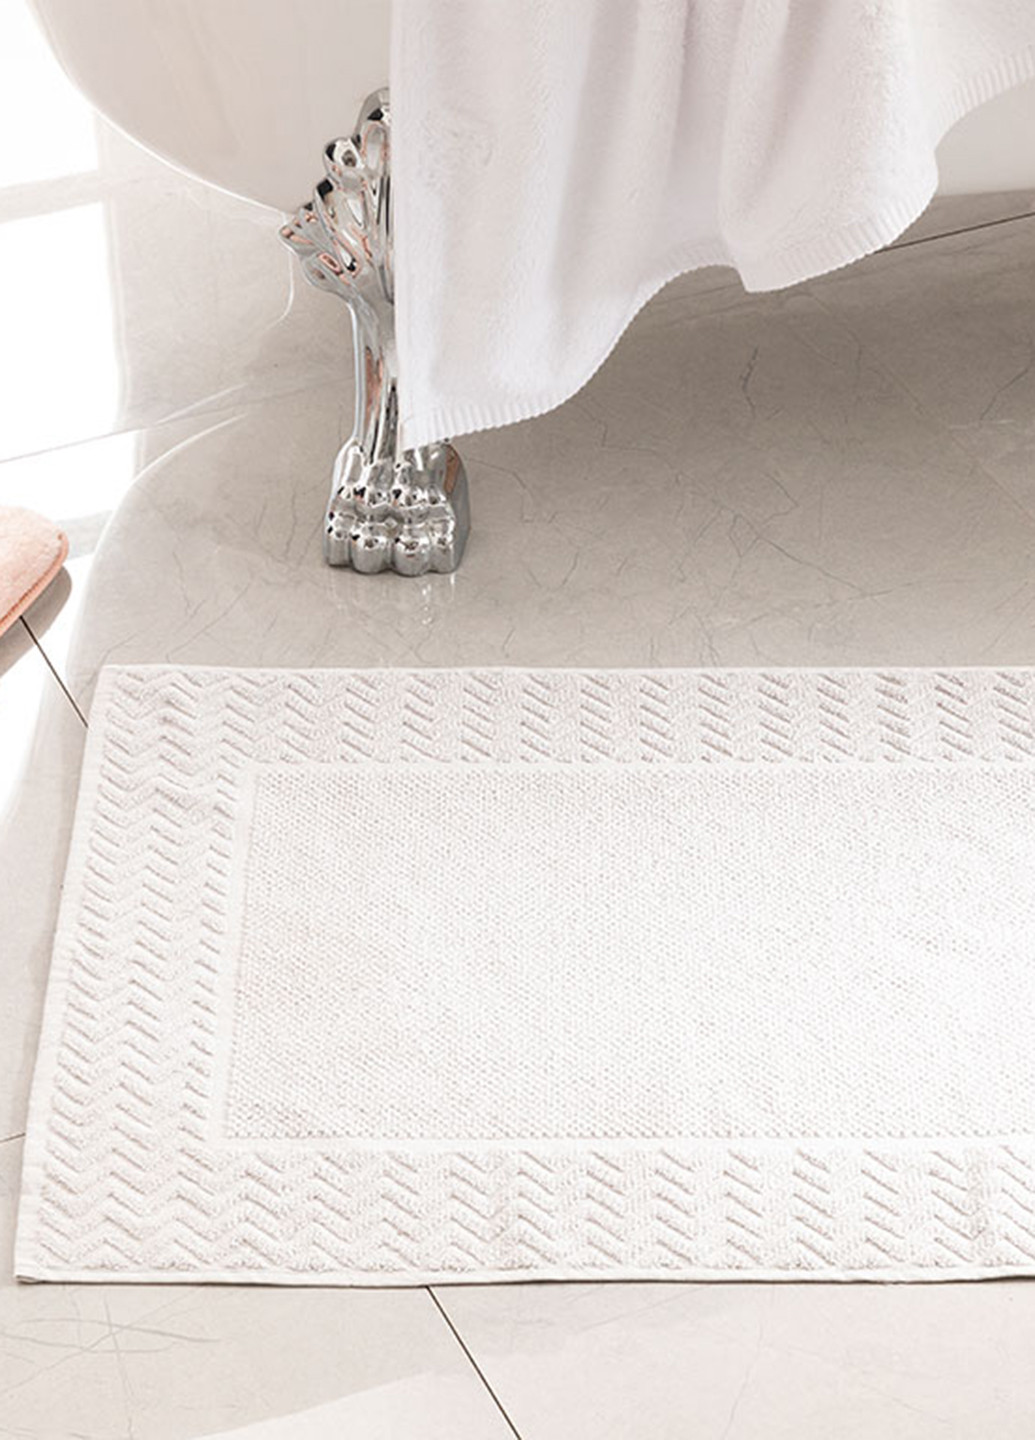 English Home полотенце для ног, 50х70 см однотонный светло-серый производство - Турция